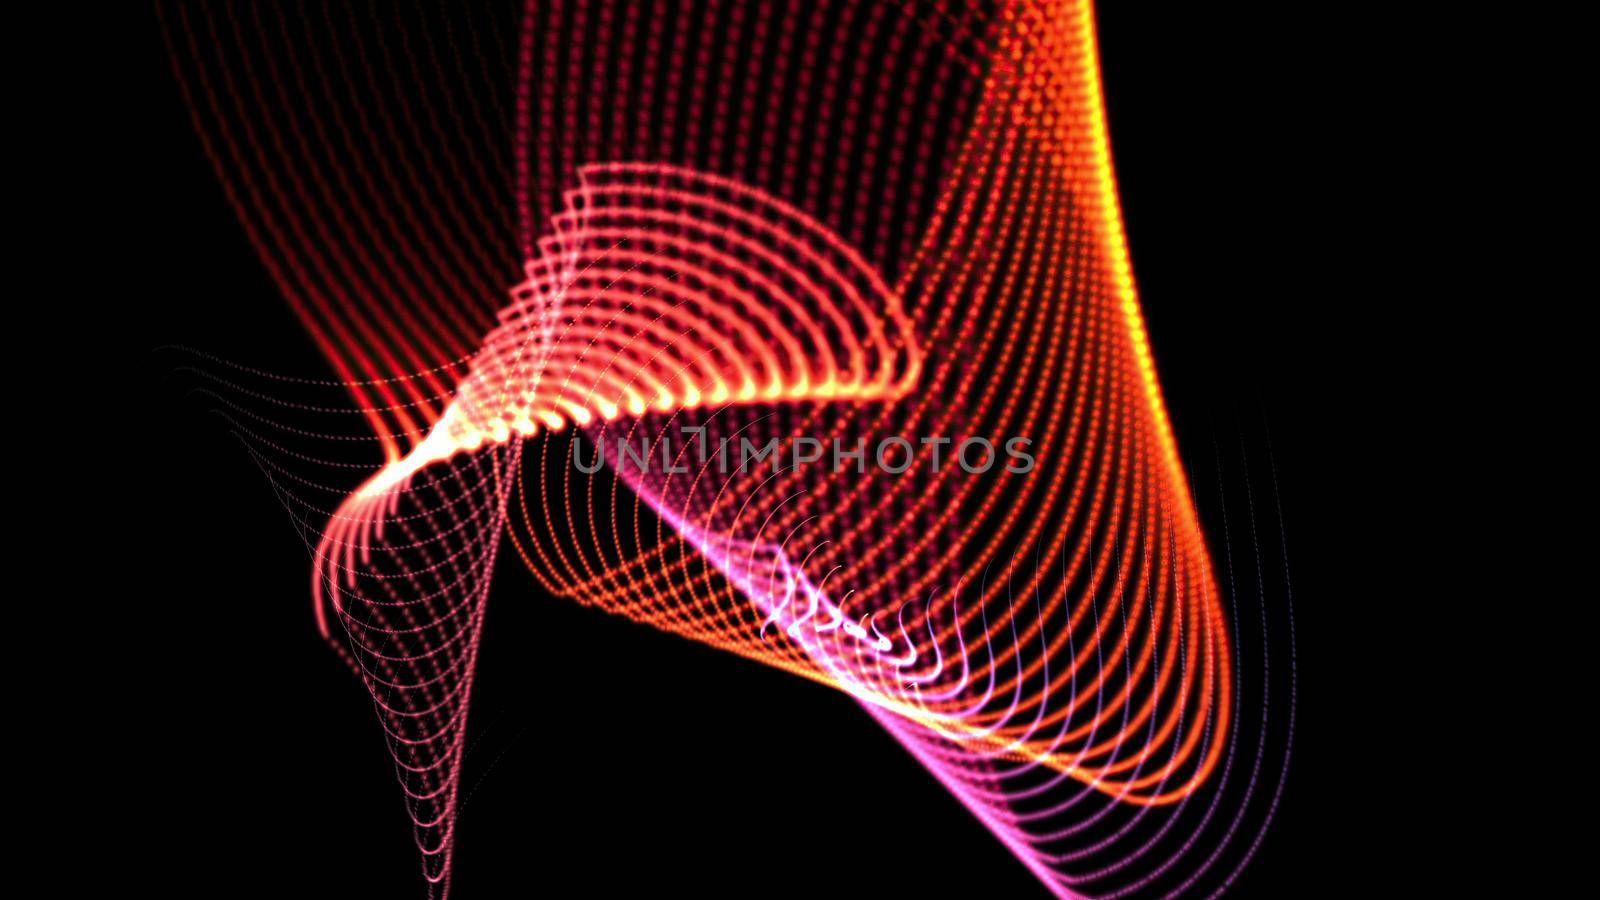 3d illustration - Hypnotic grid of lines creates geometric patterns. Computer graphics